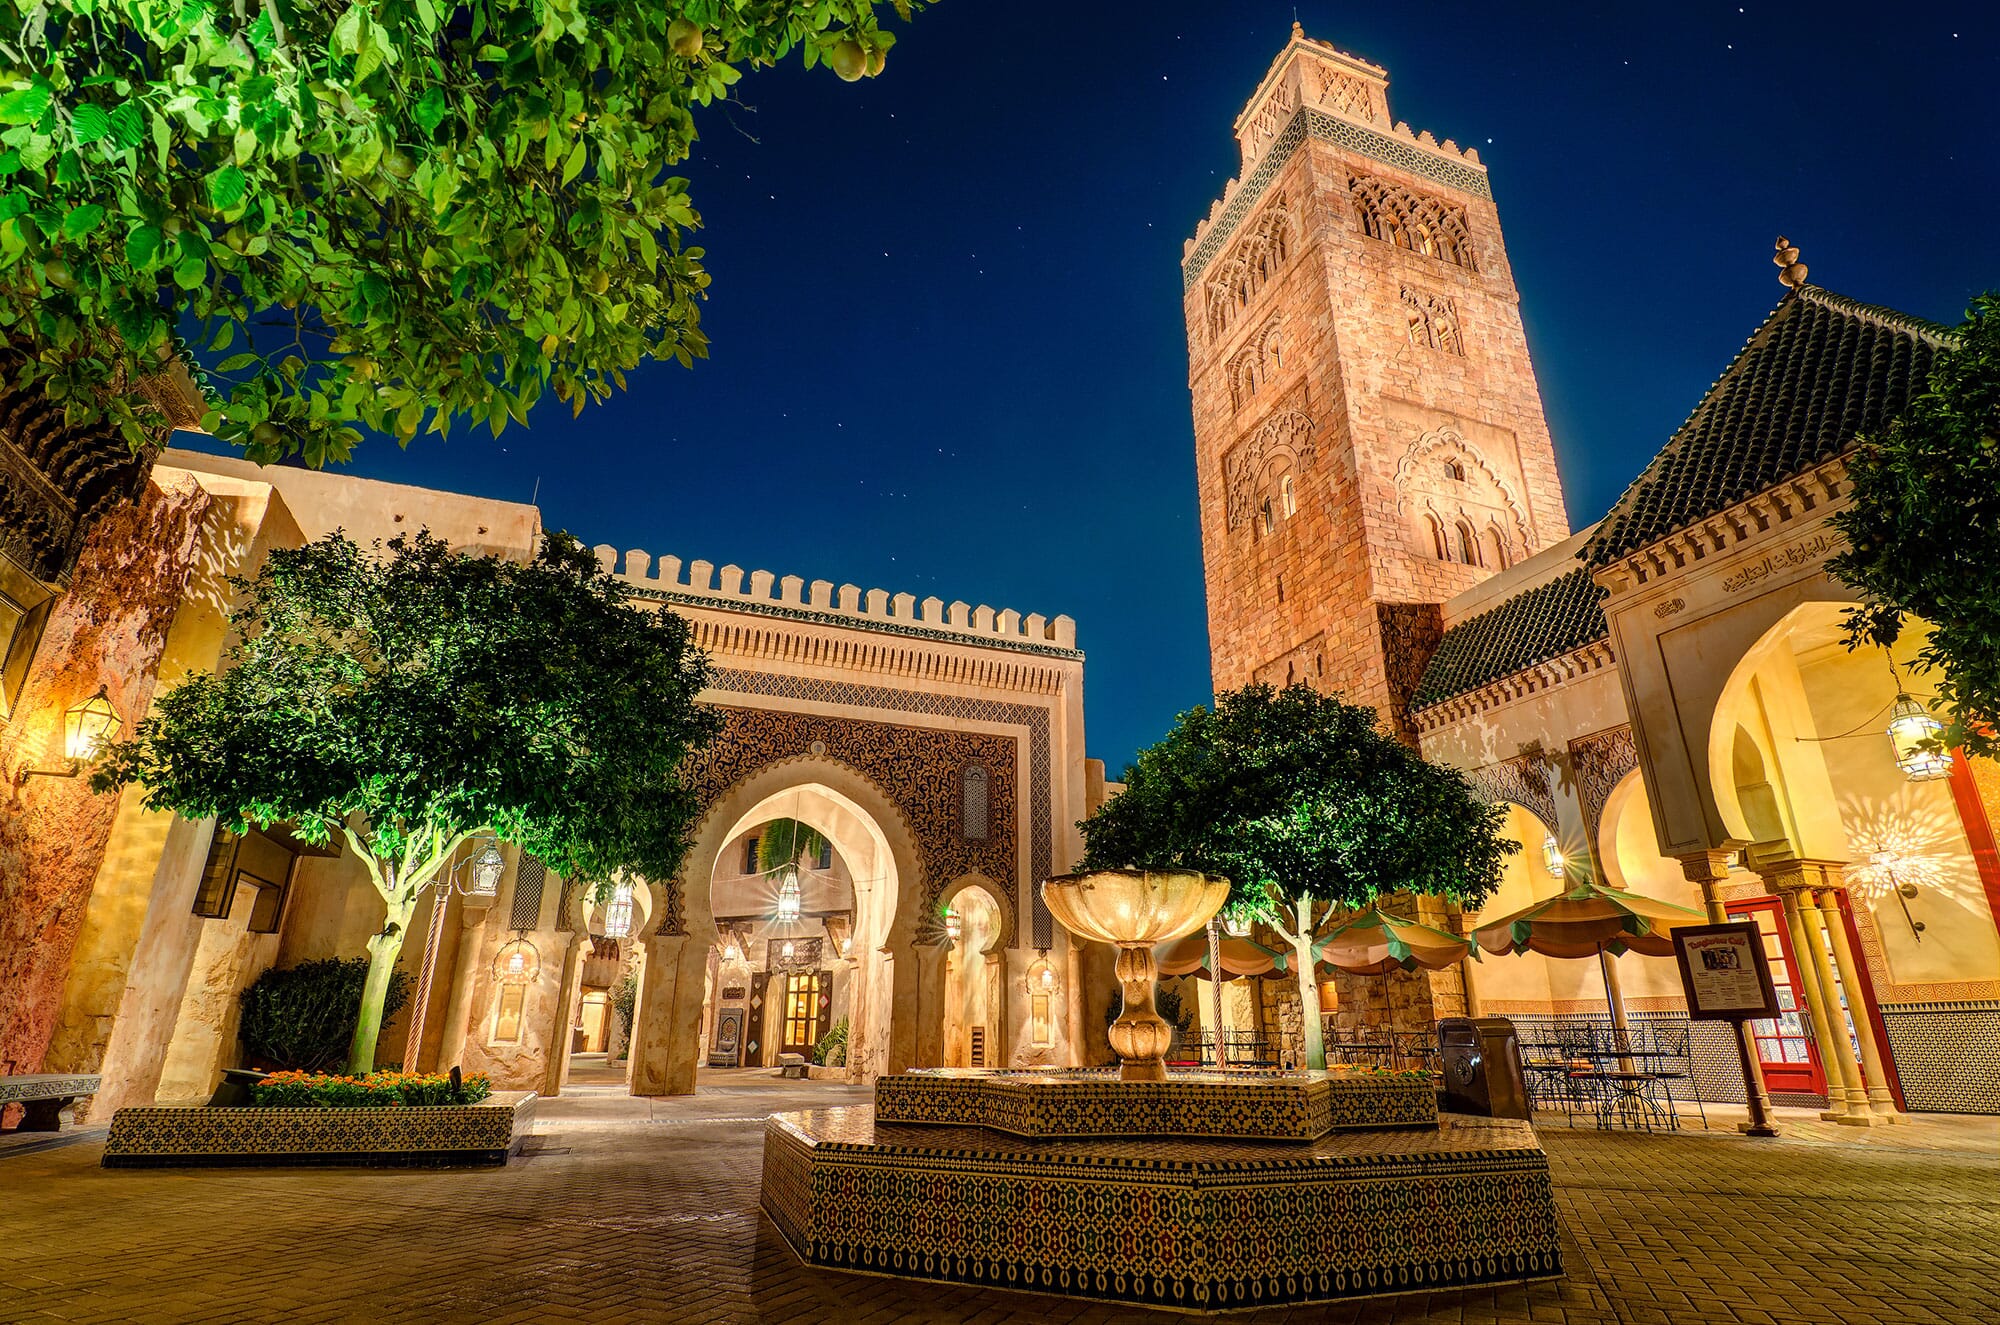 Discover the Magic of the Medina of Marrakech